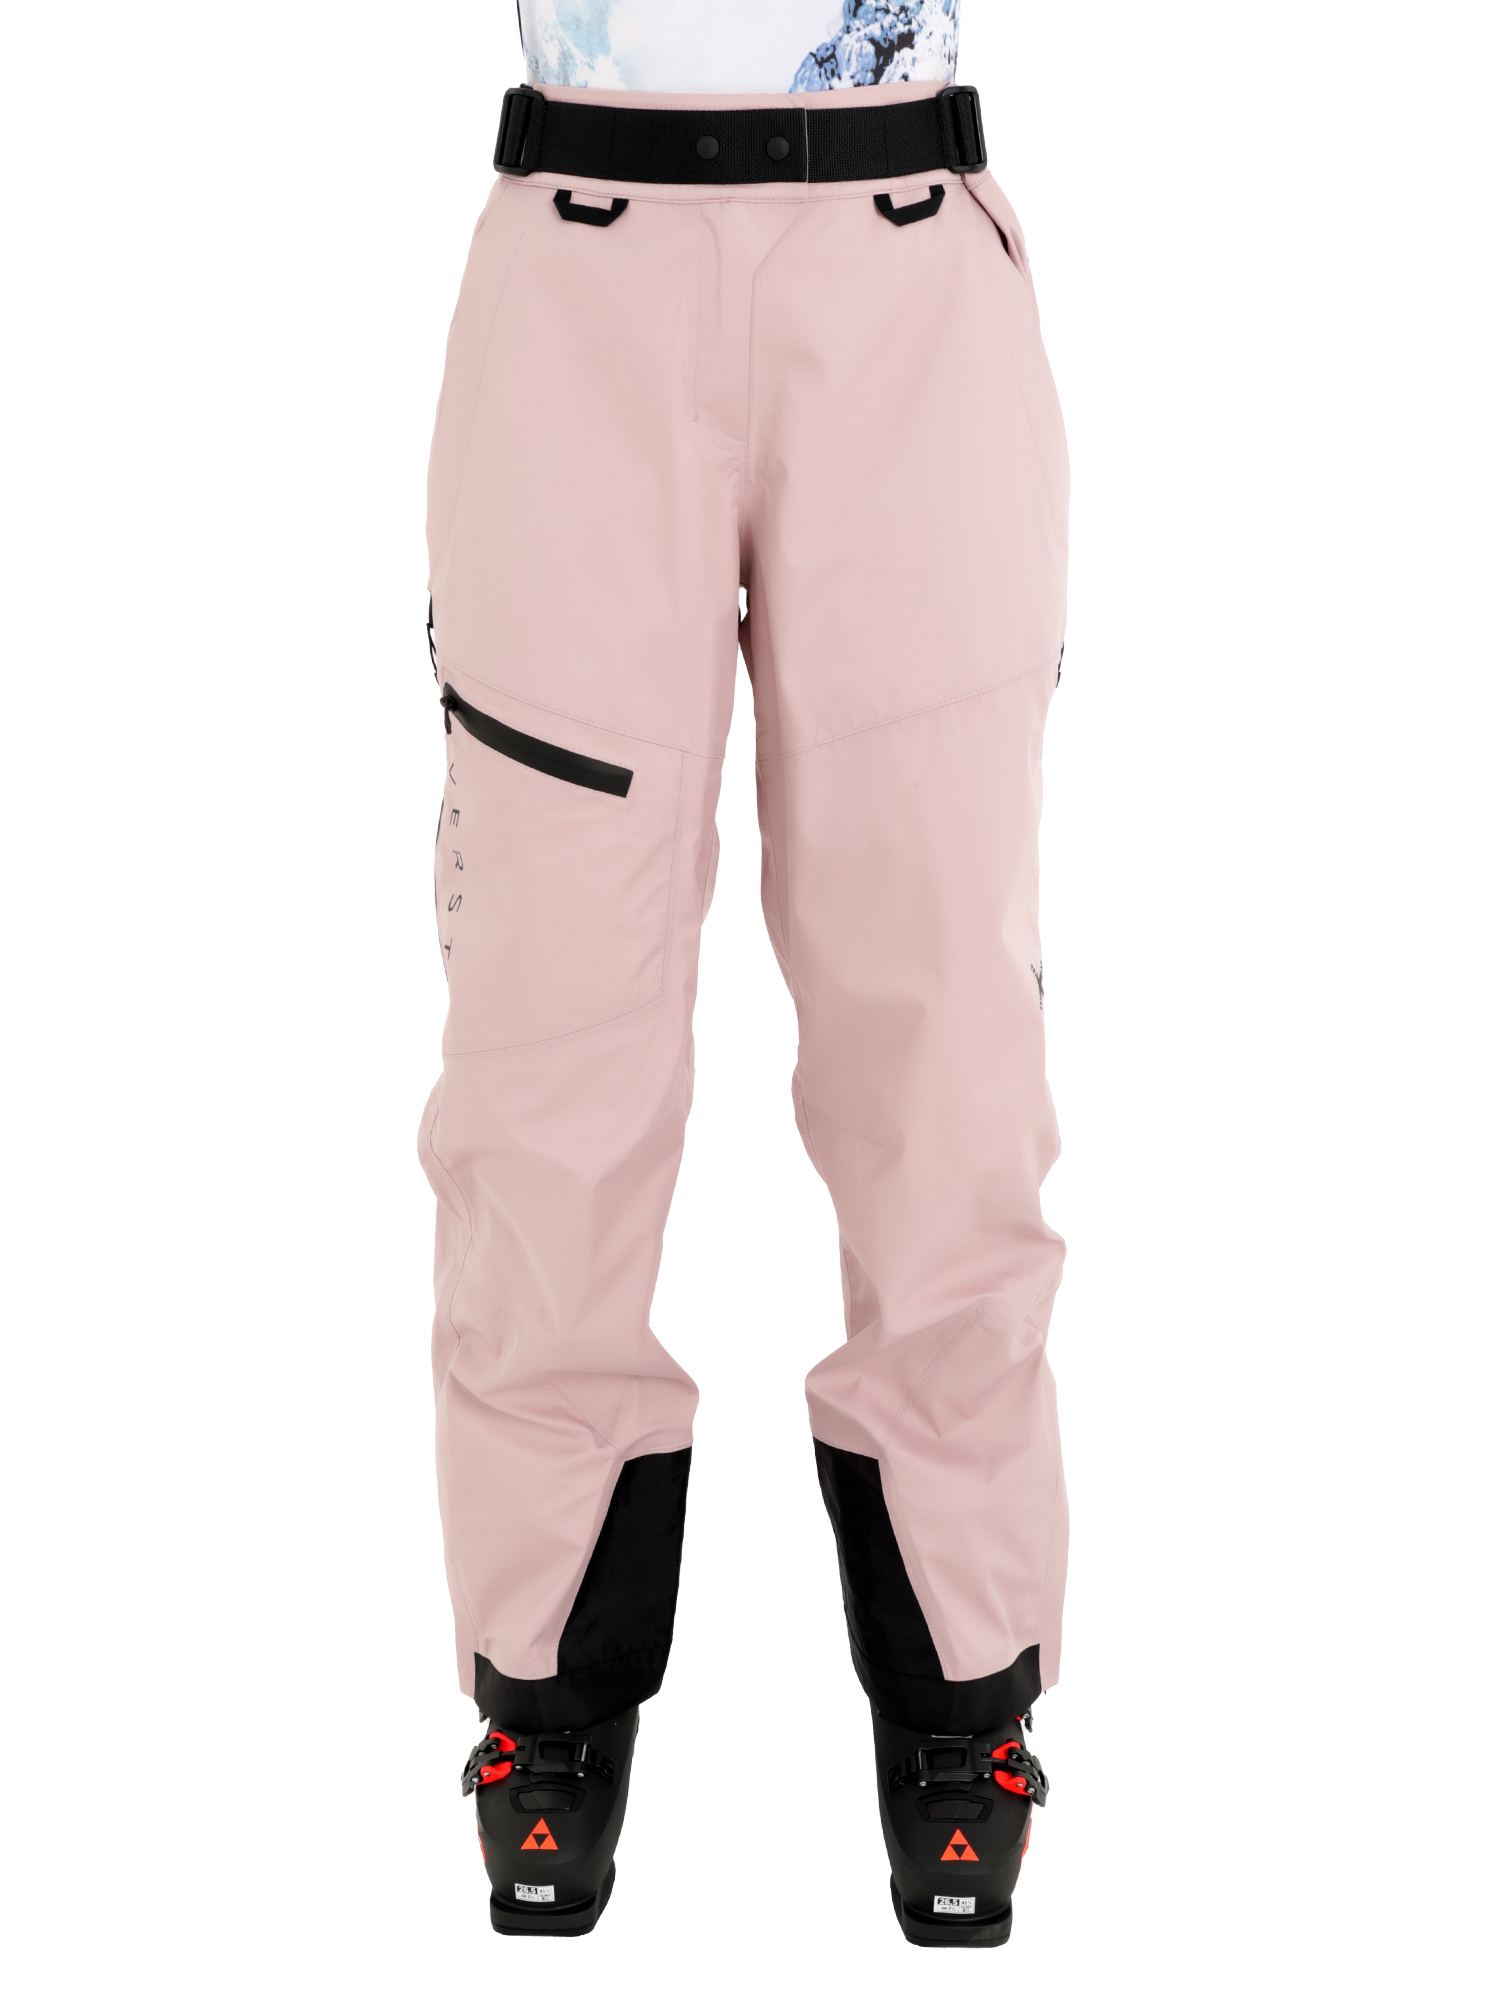 Спортивные брюки Versta Rider Collection Woman pink M INT